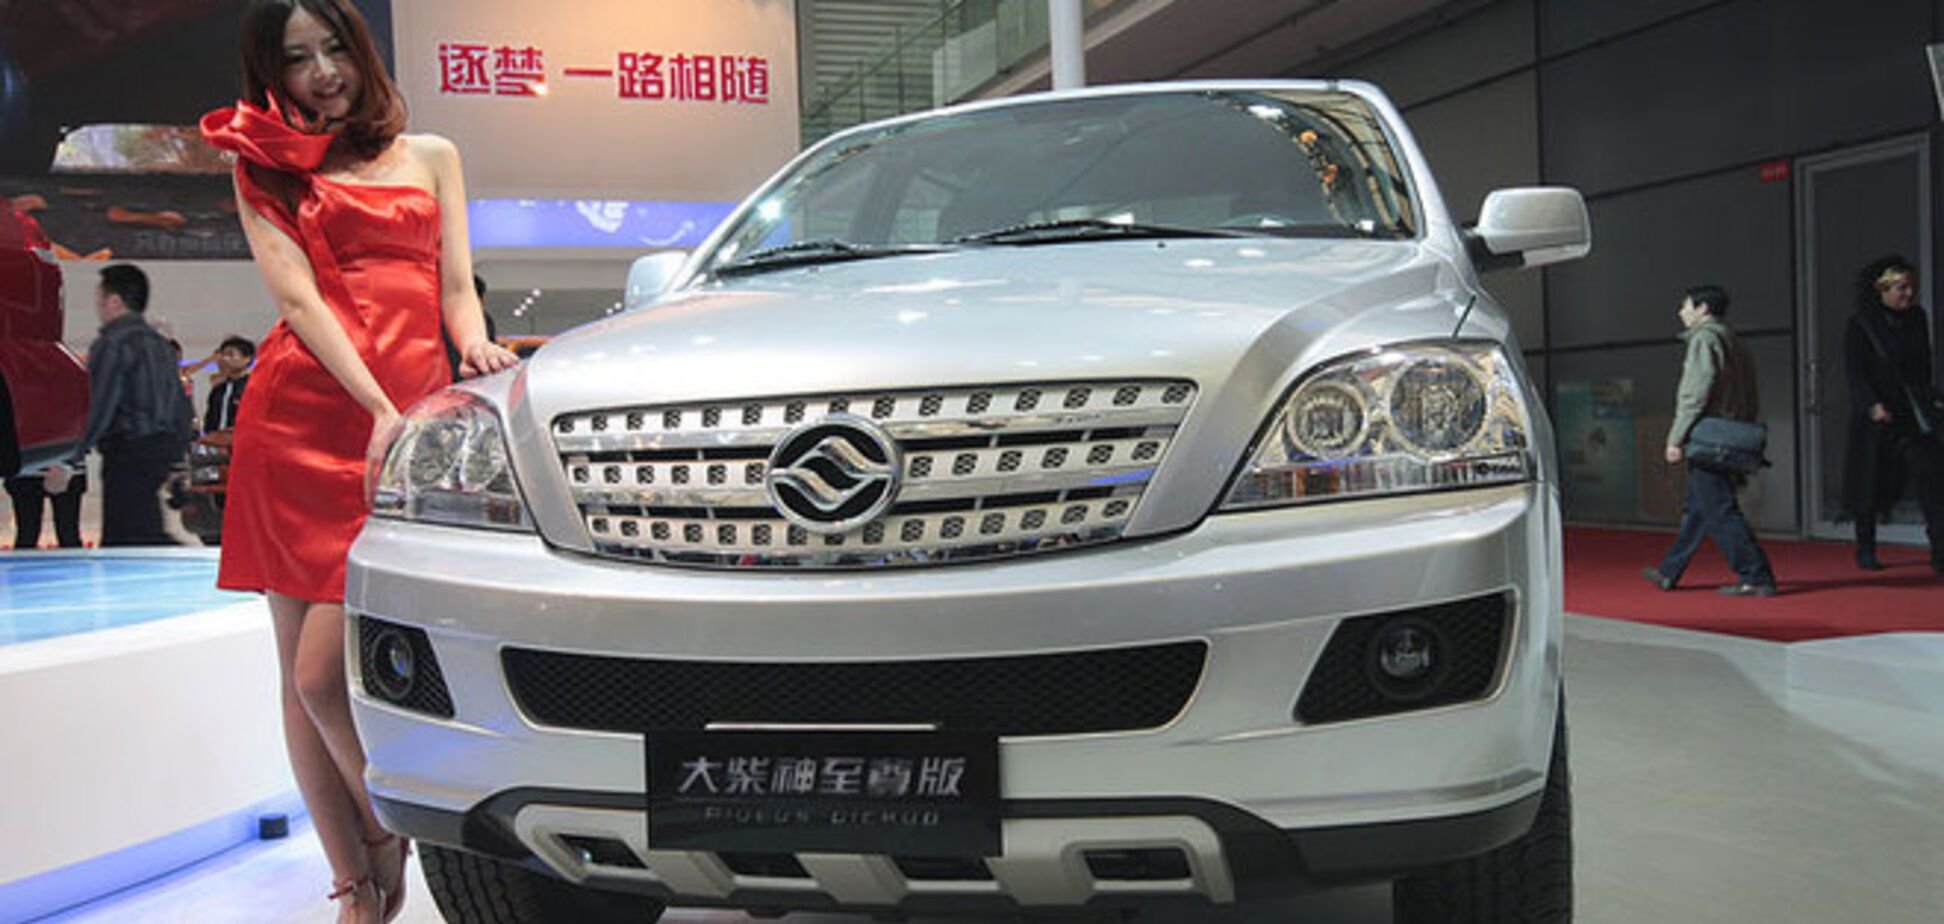 Китайские автомобили цена характеристики